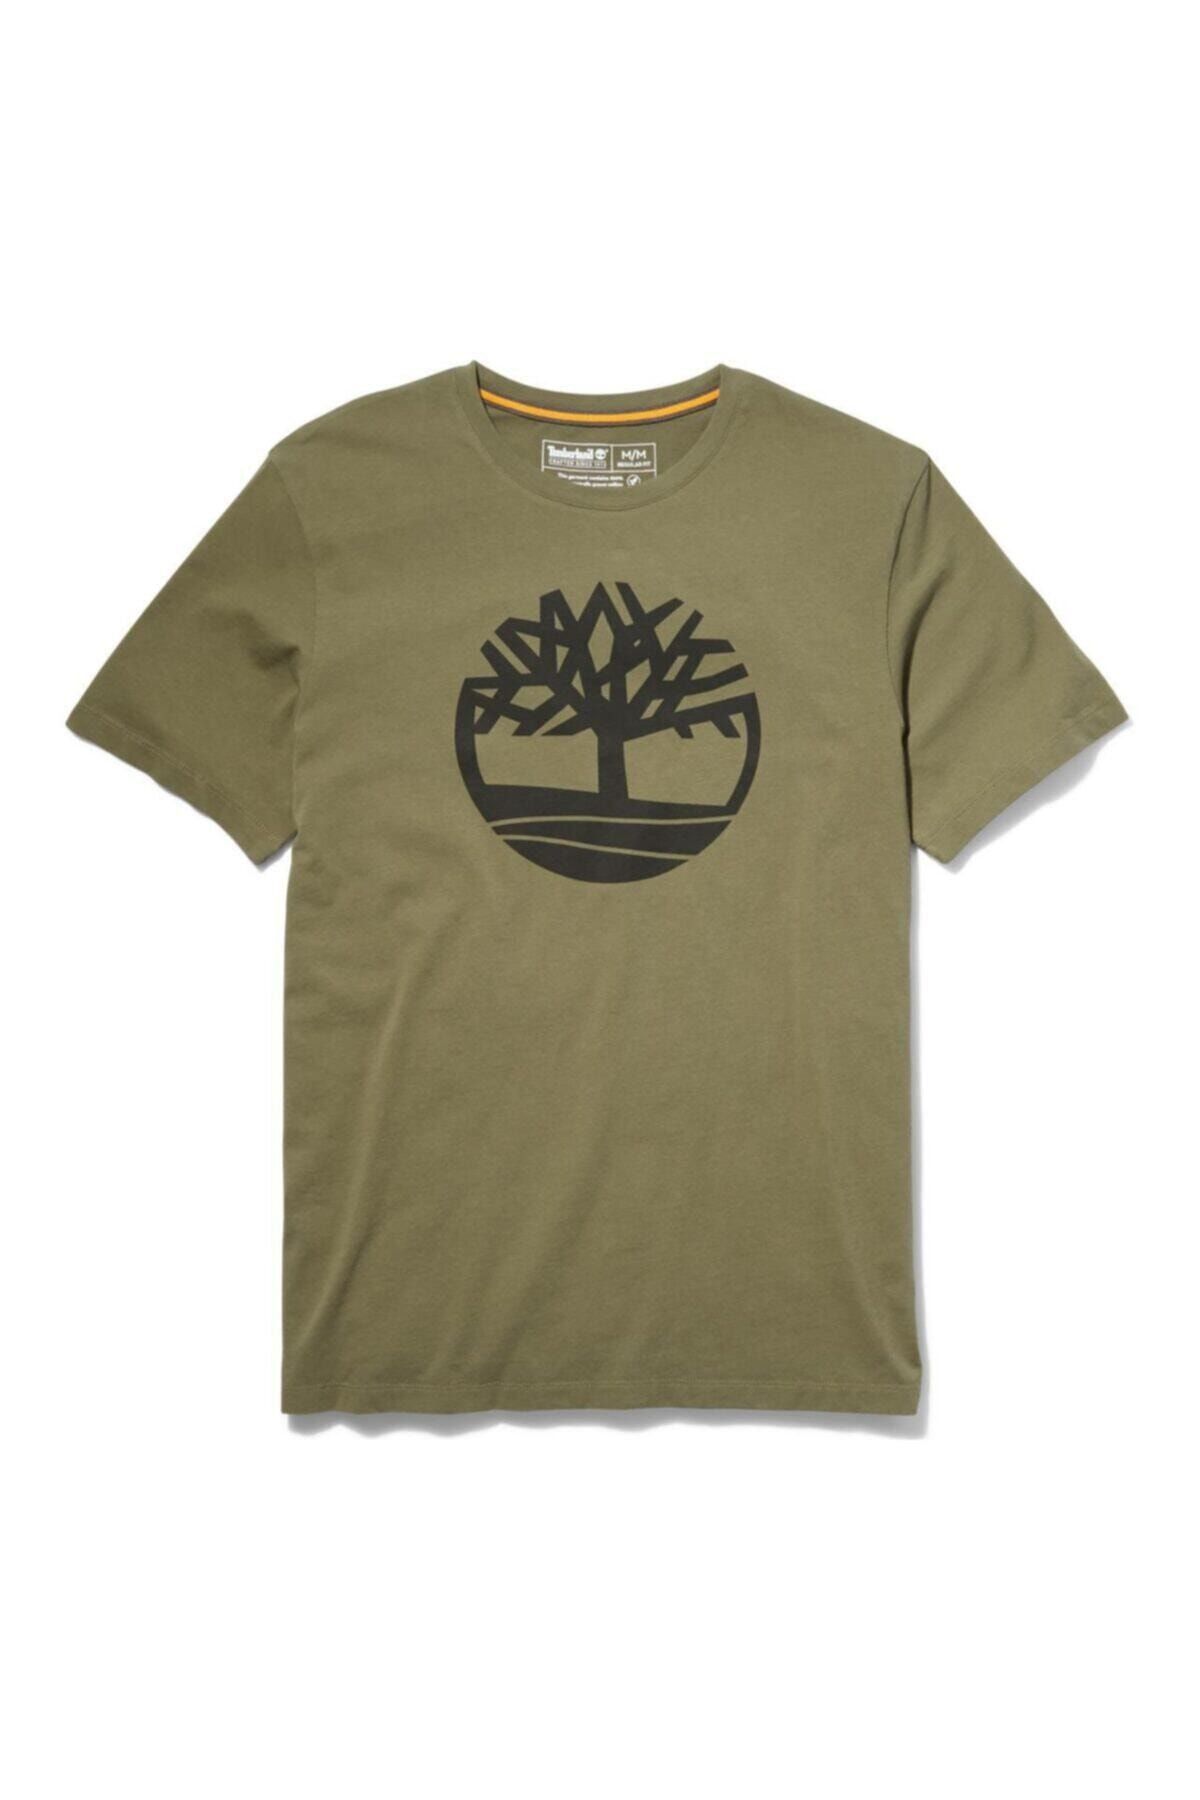 Timberland SS KENNEBEC RIVER TREE LO Haki Erkek T-Shirt 101096734